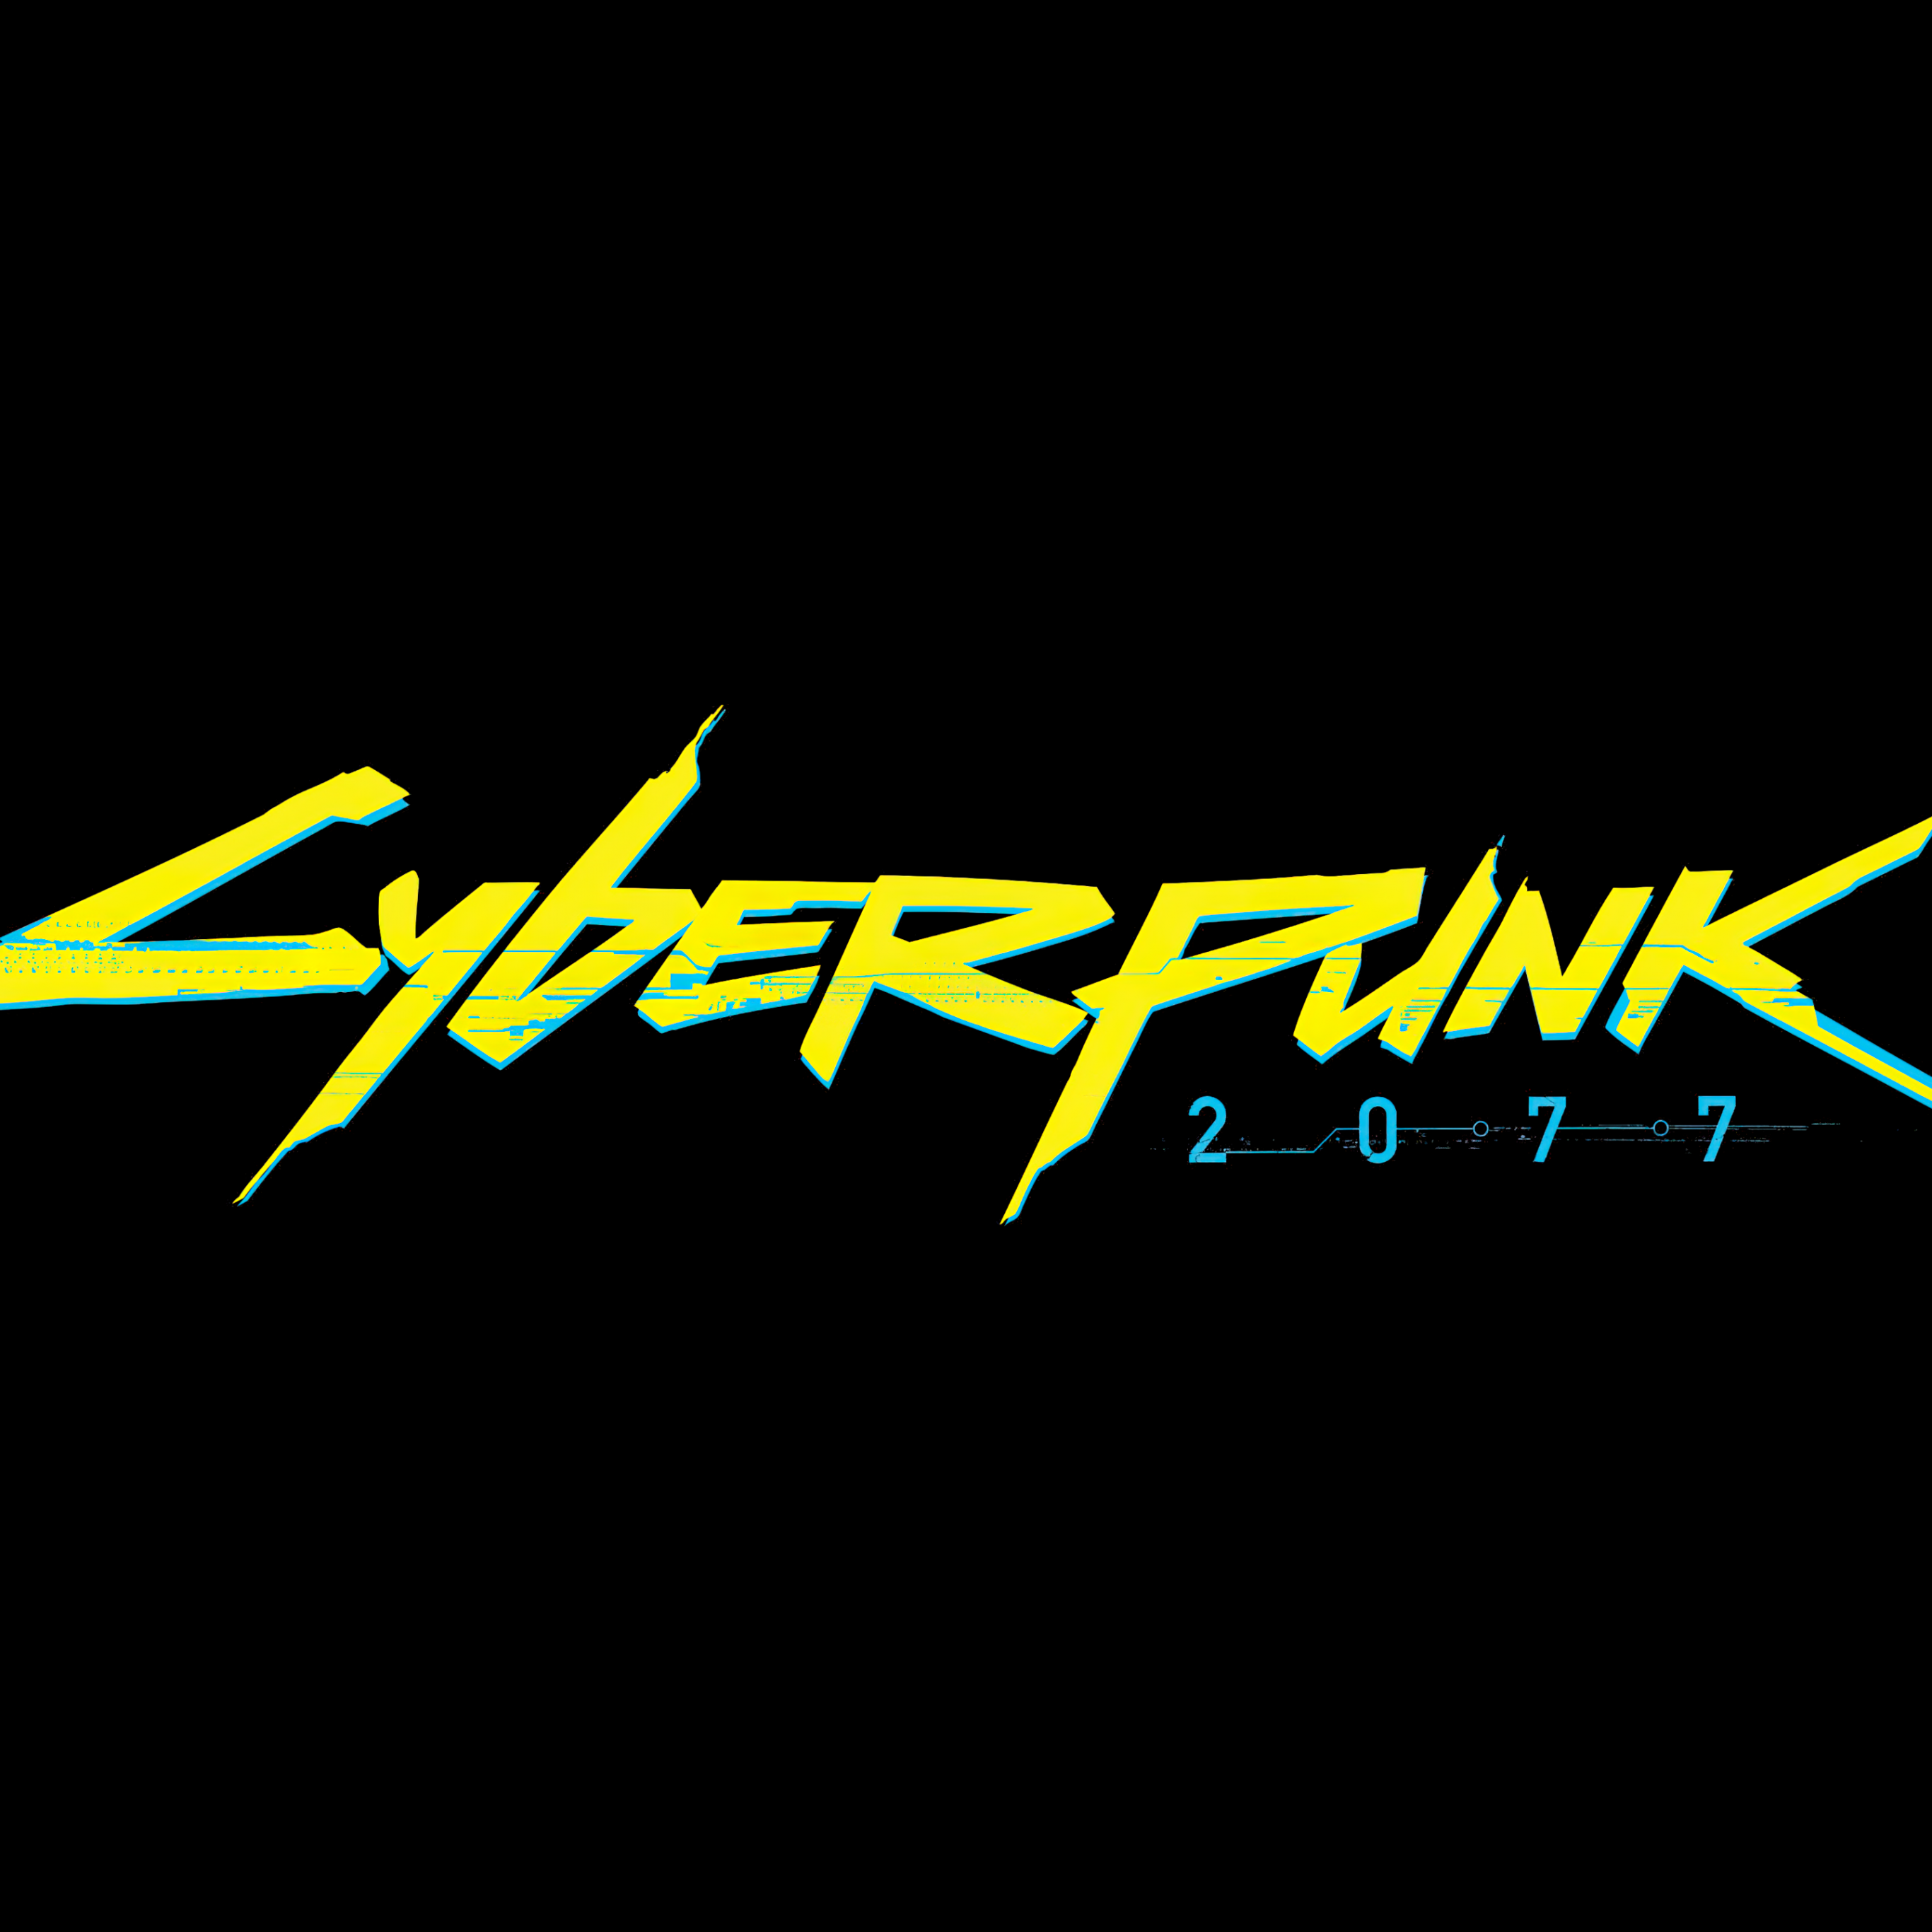 скачать логотип cyberpunk фото 109